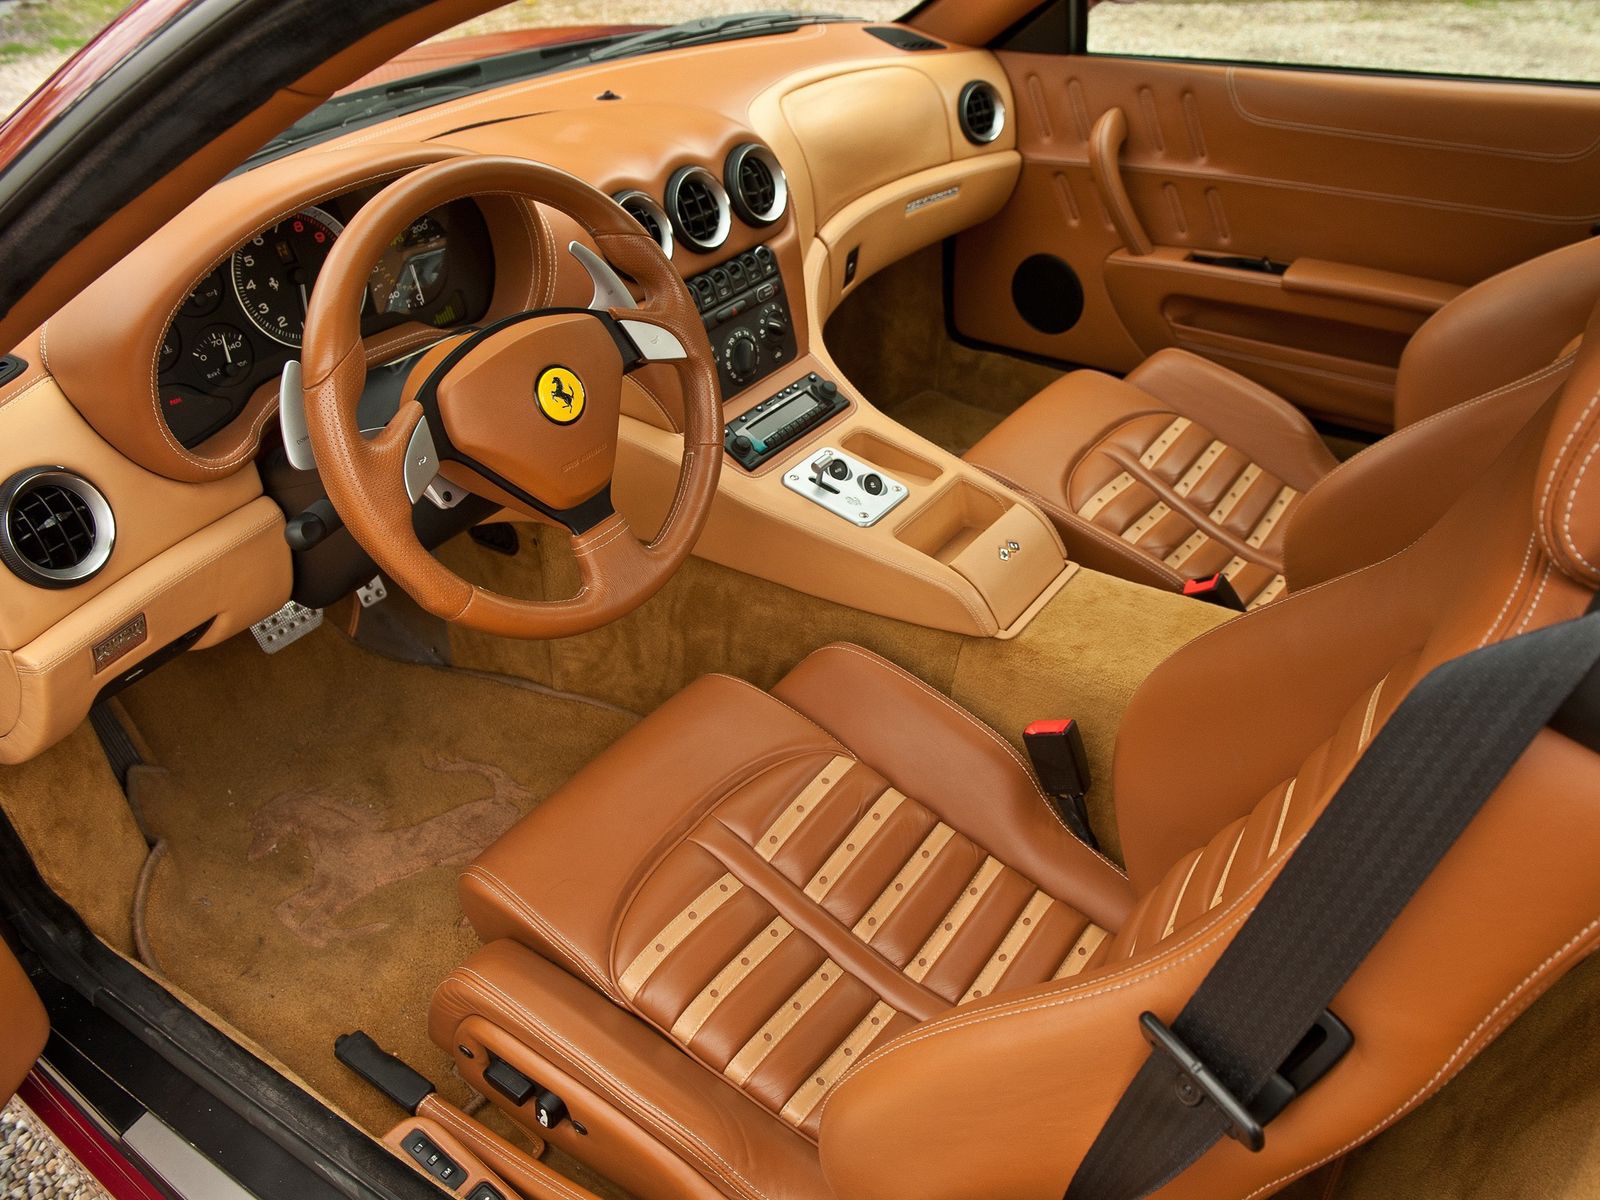 Ferrari 575M Wallpapers